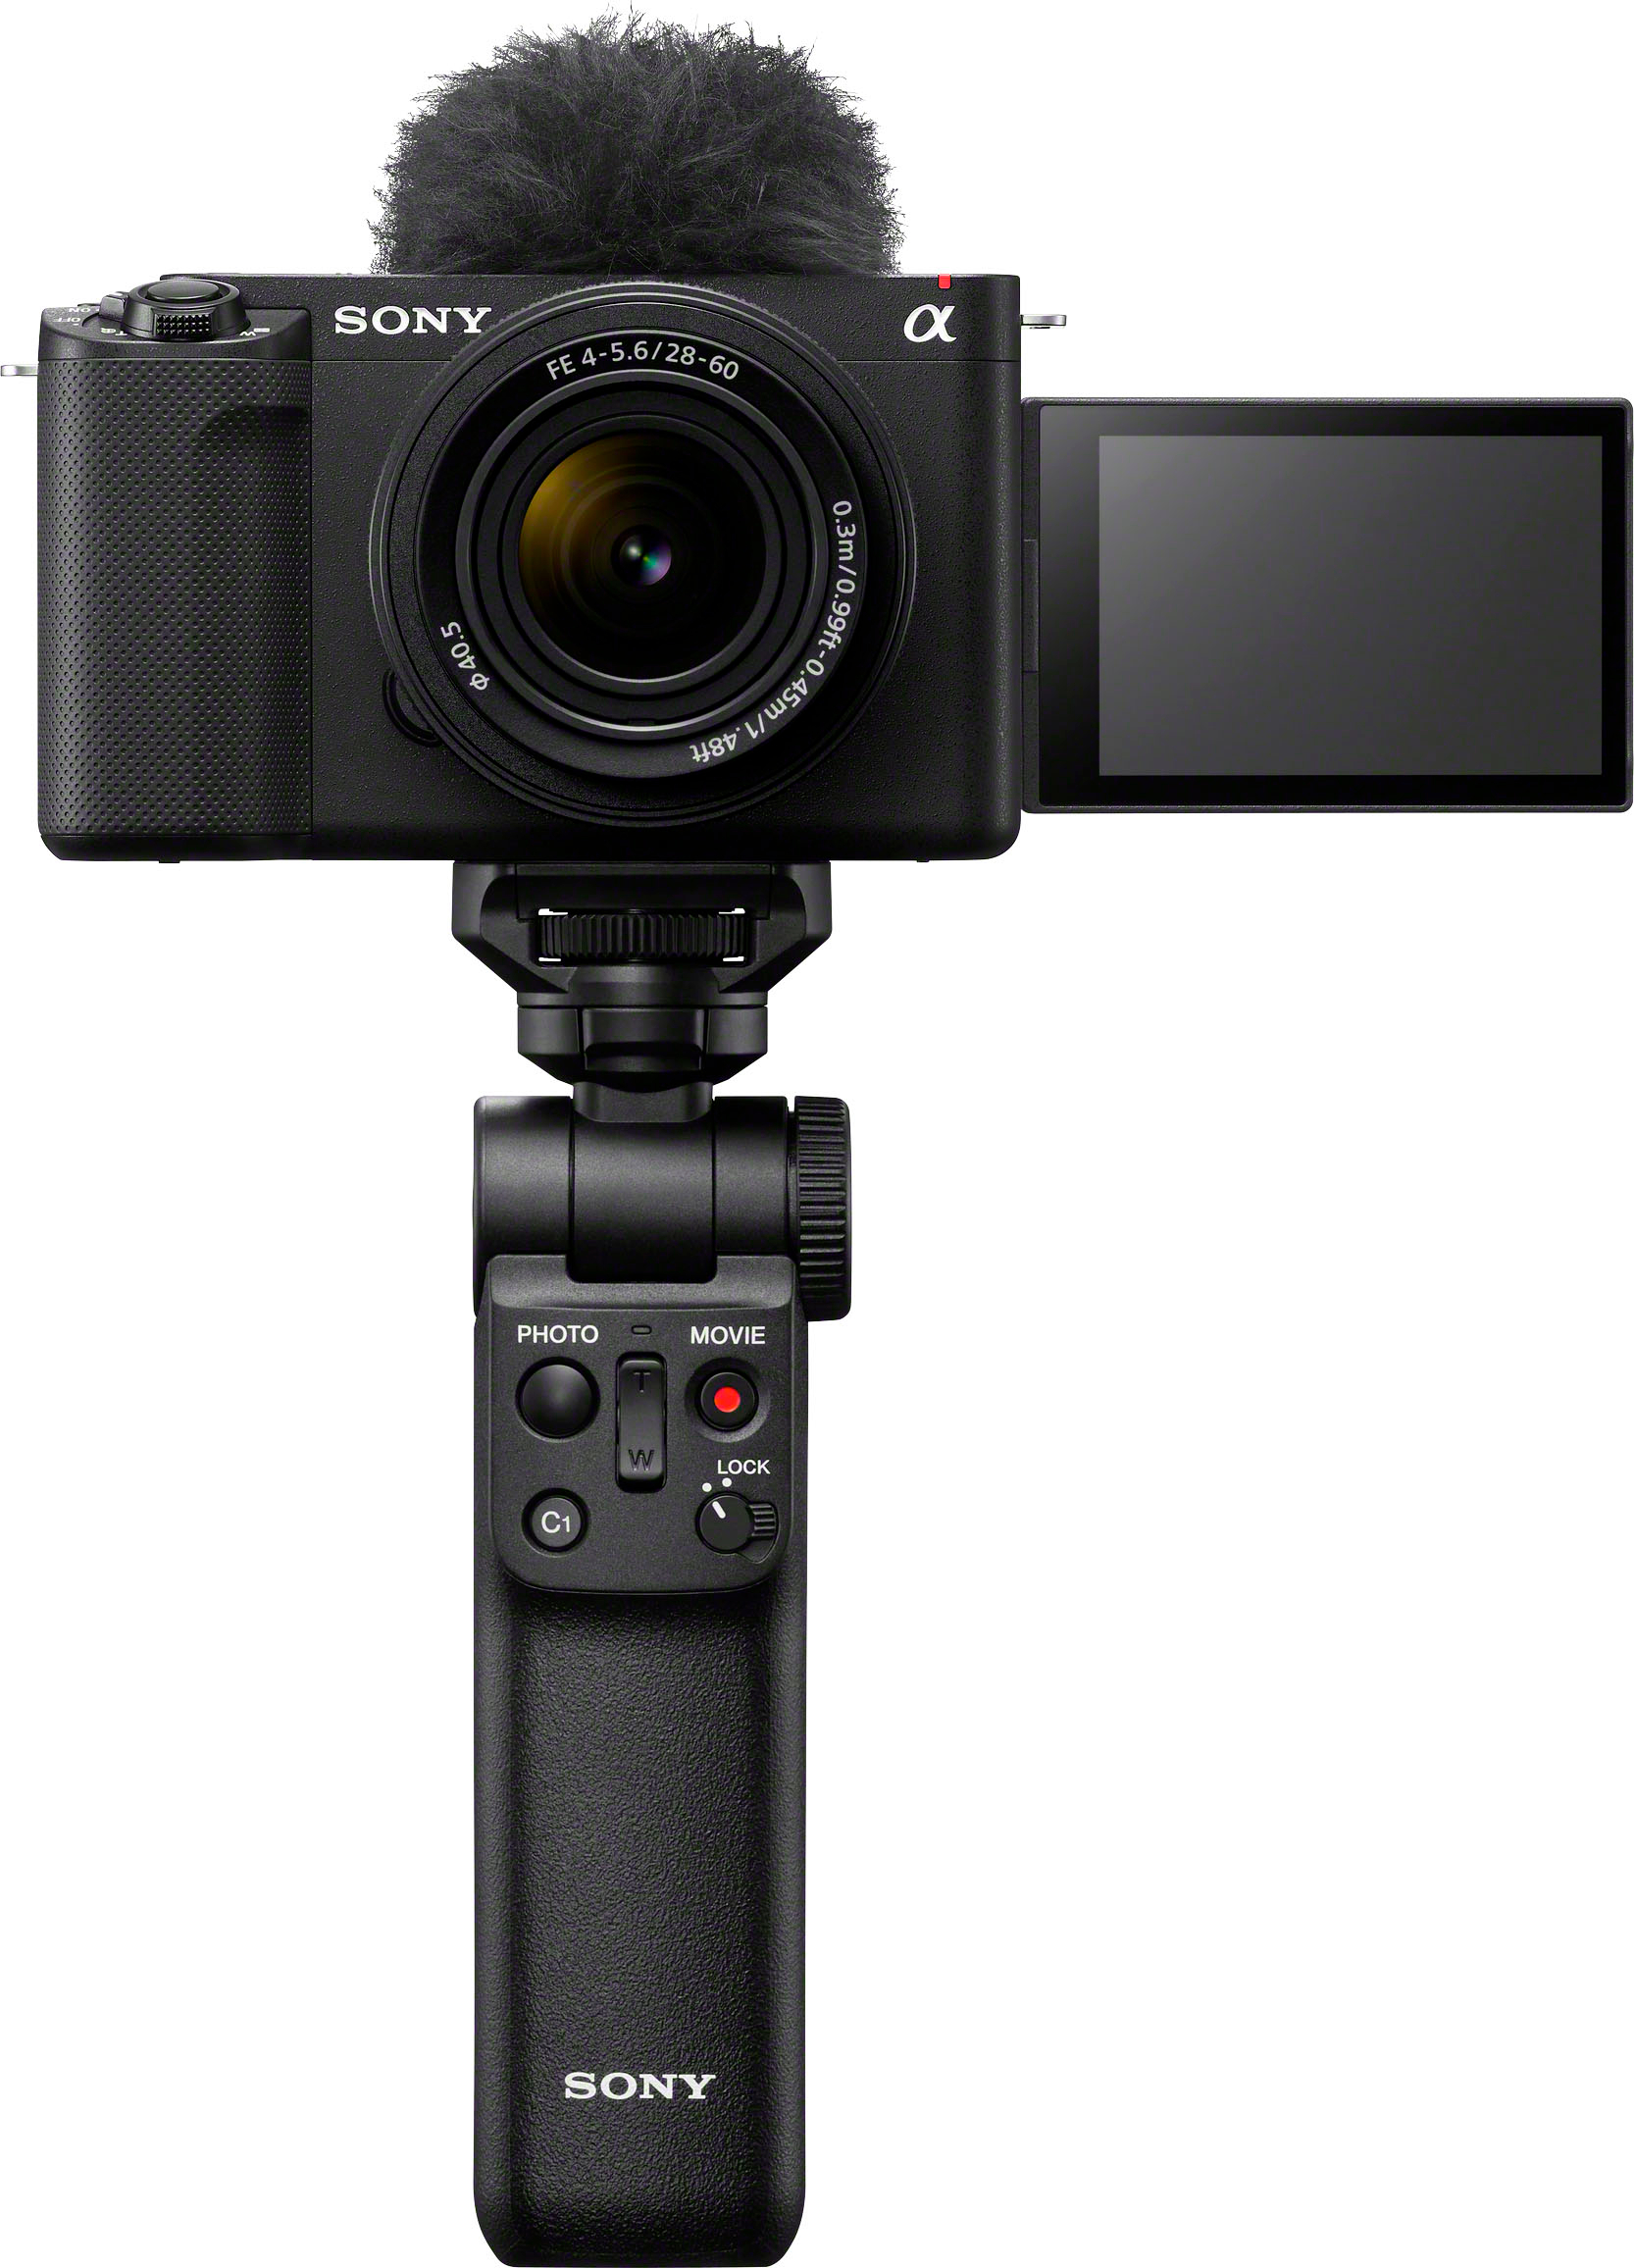 Sony ZV-E1 Mirrorless Camera with 28-60mm Lens Black